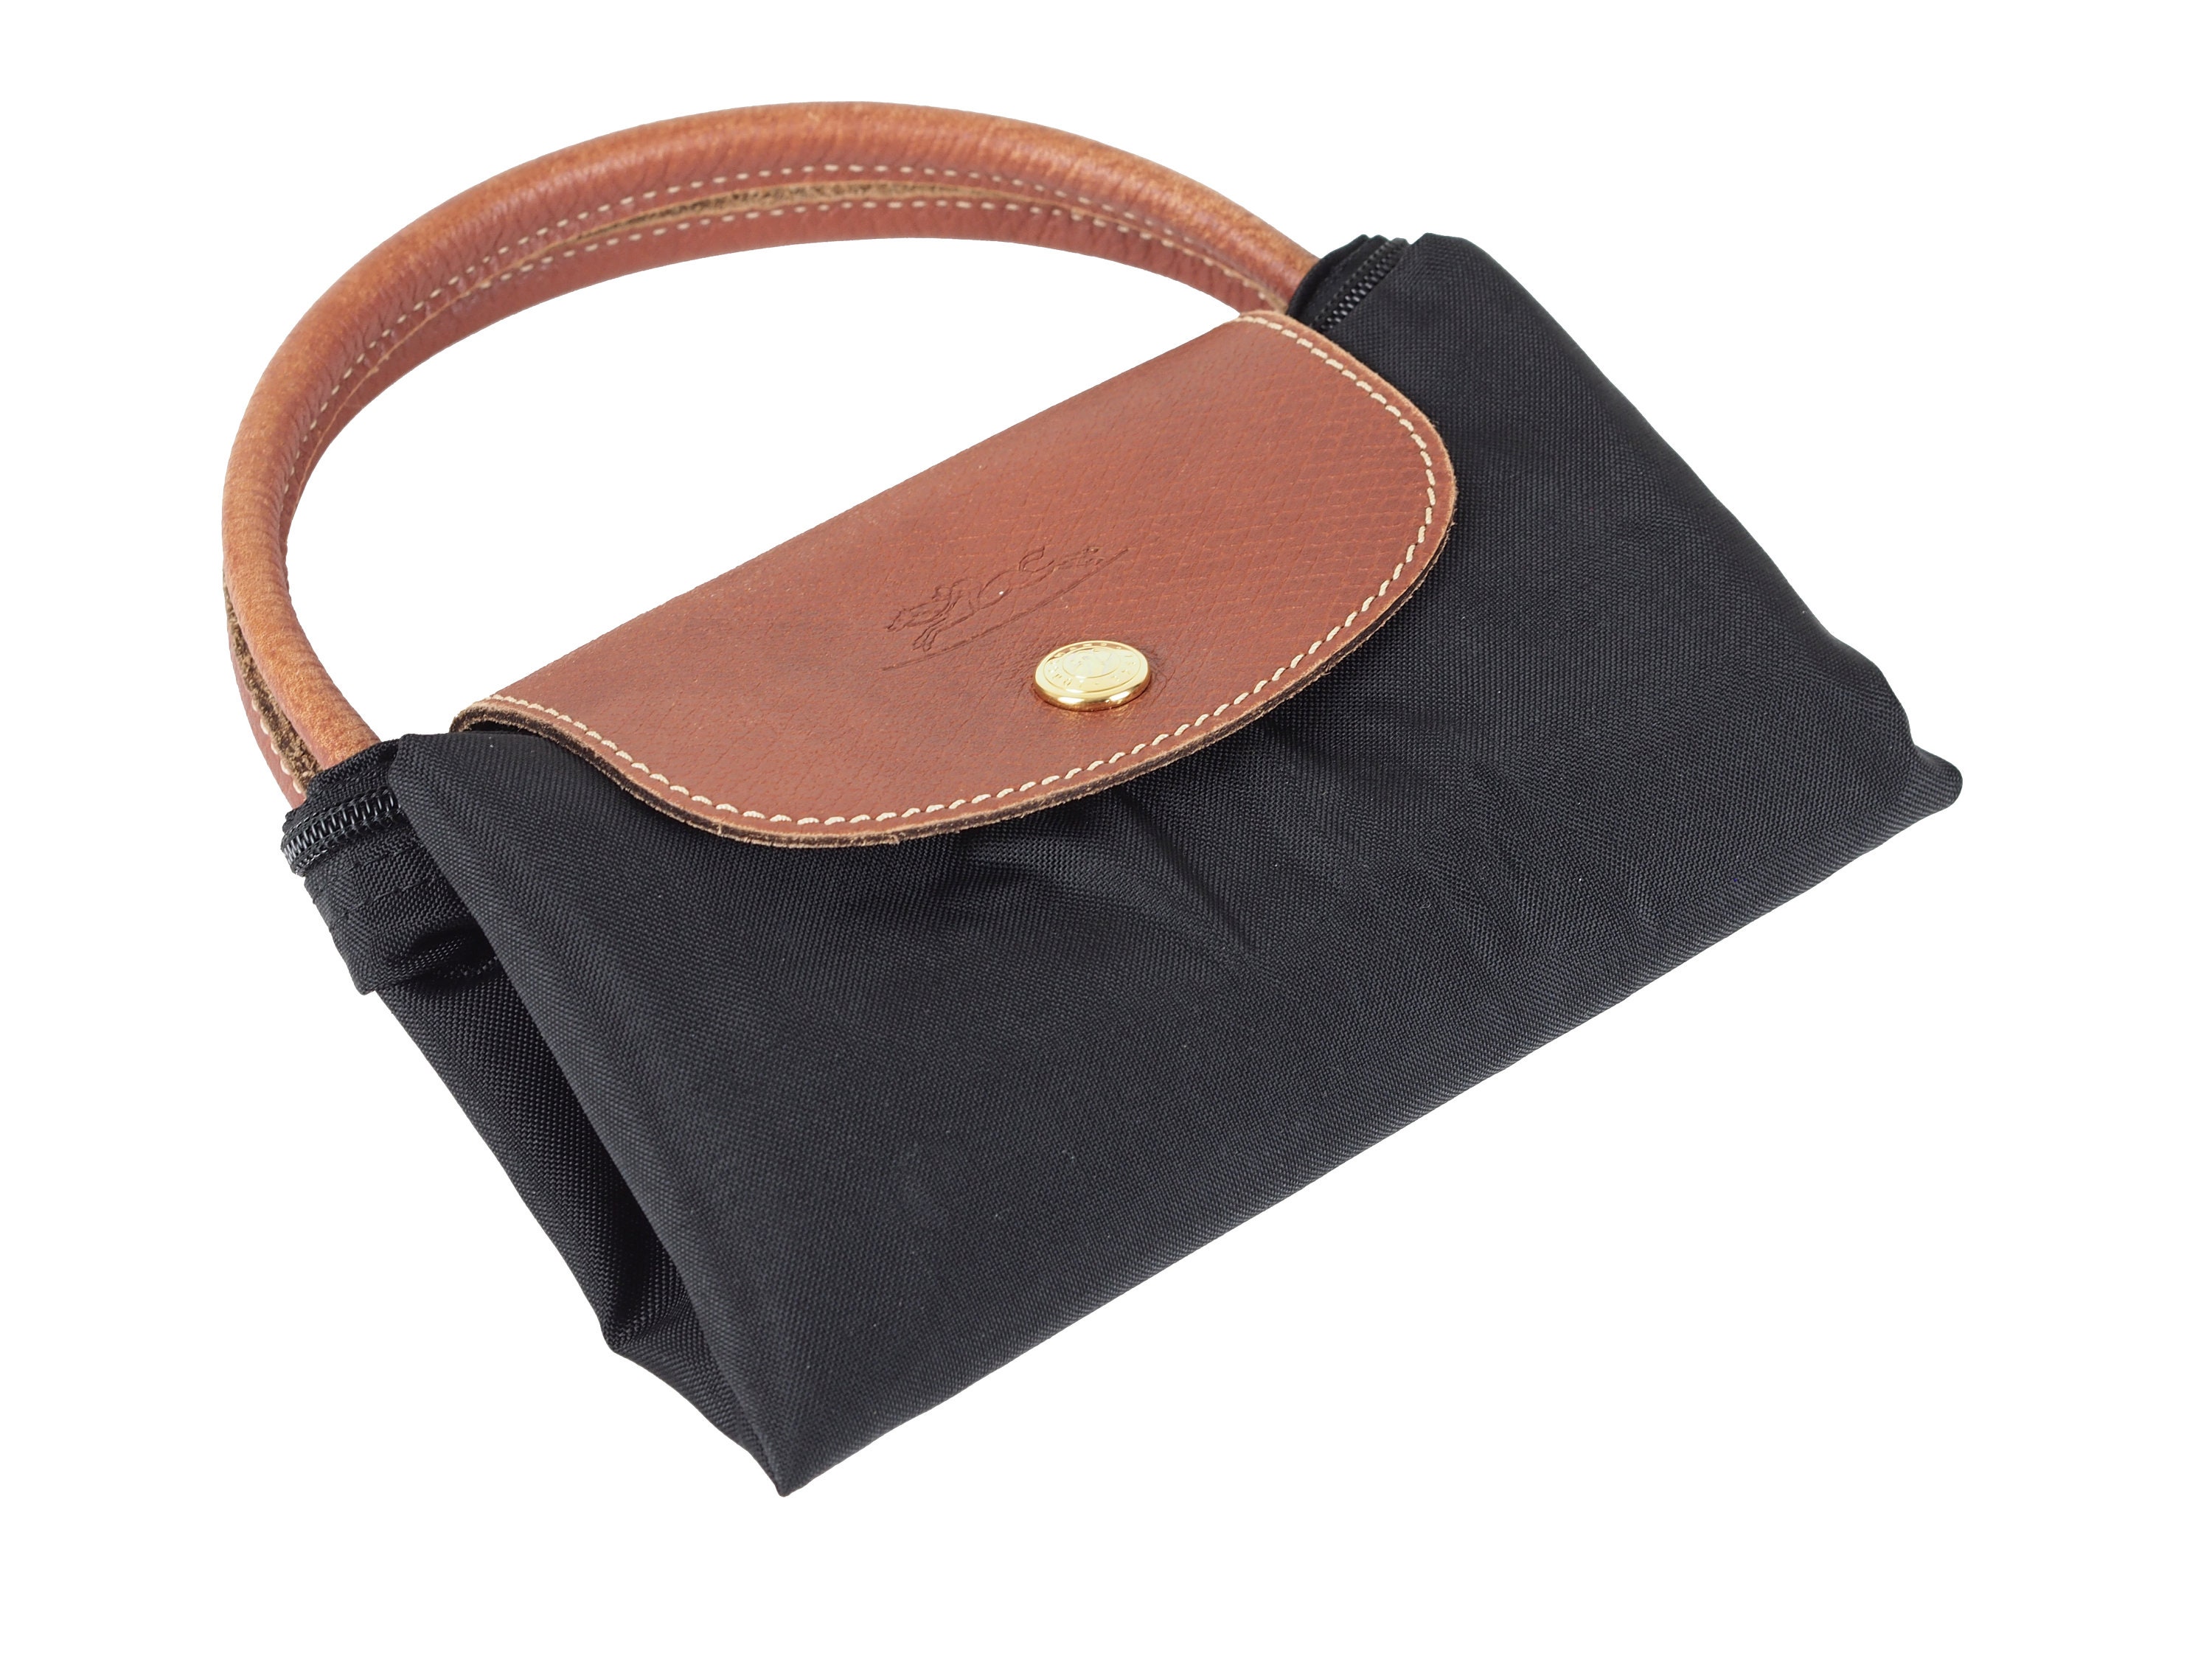 Longchamp - Authenticated Handbag - Leather Blue Plain for Women, Good Condition